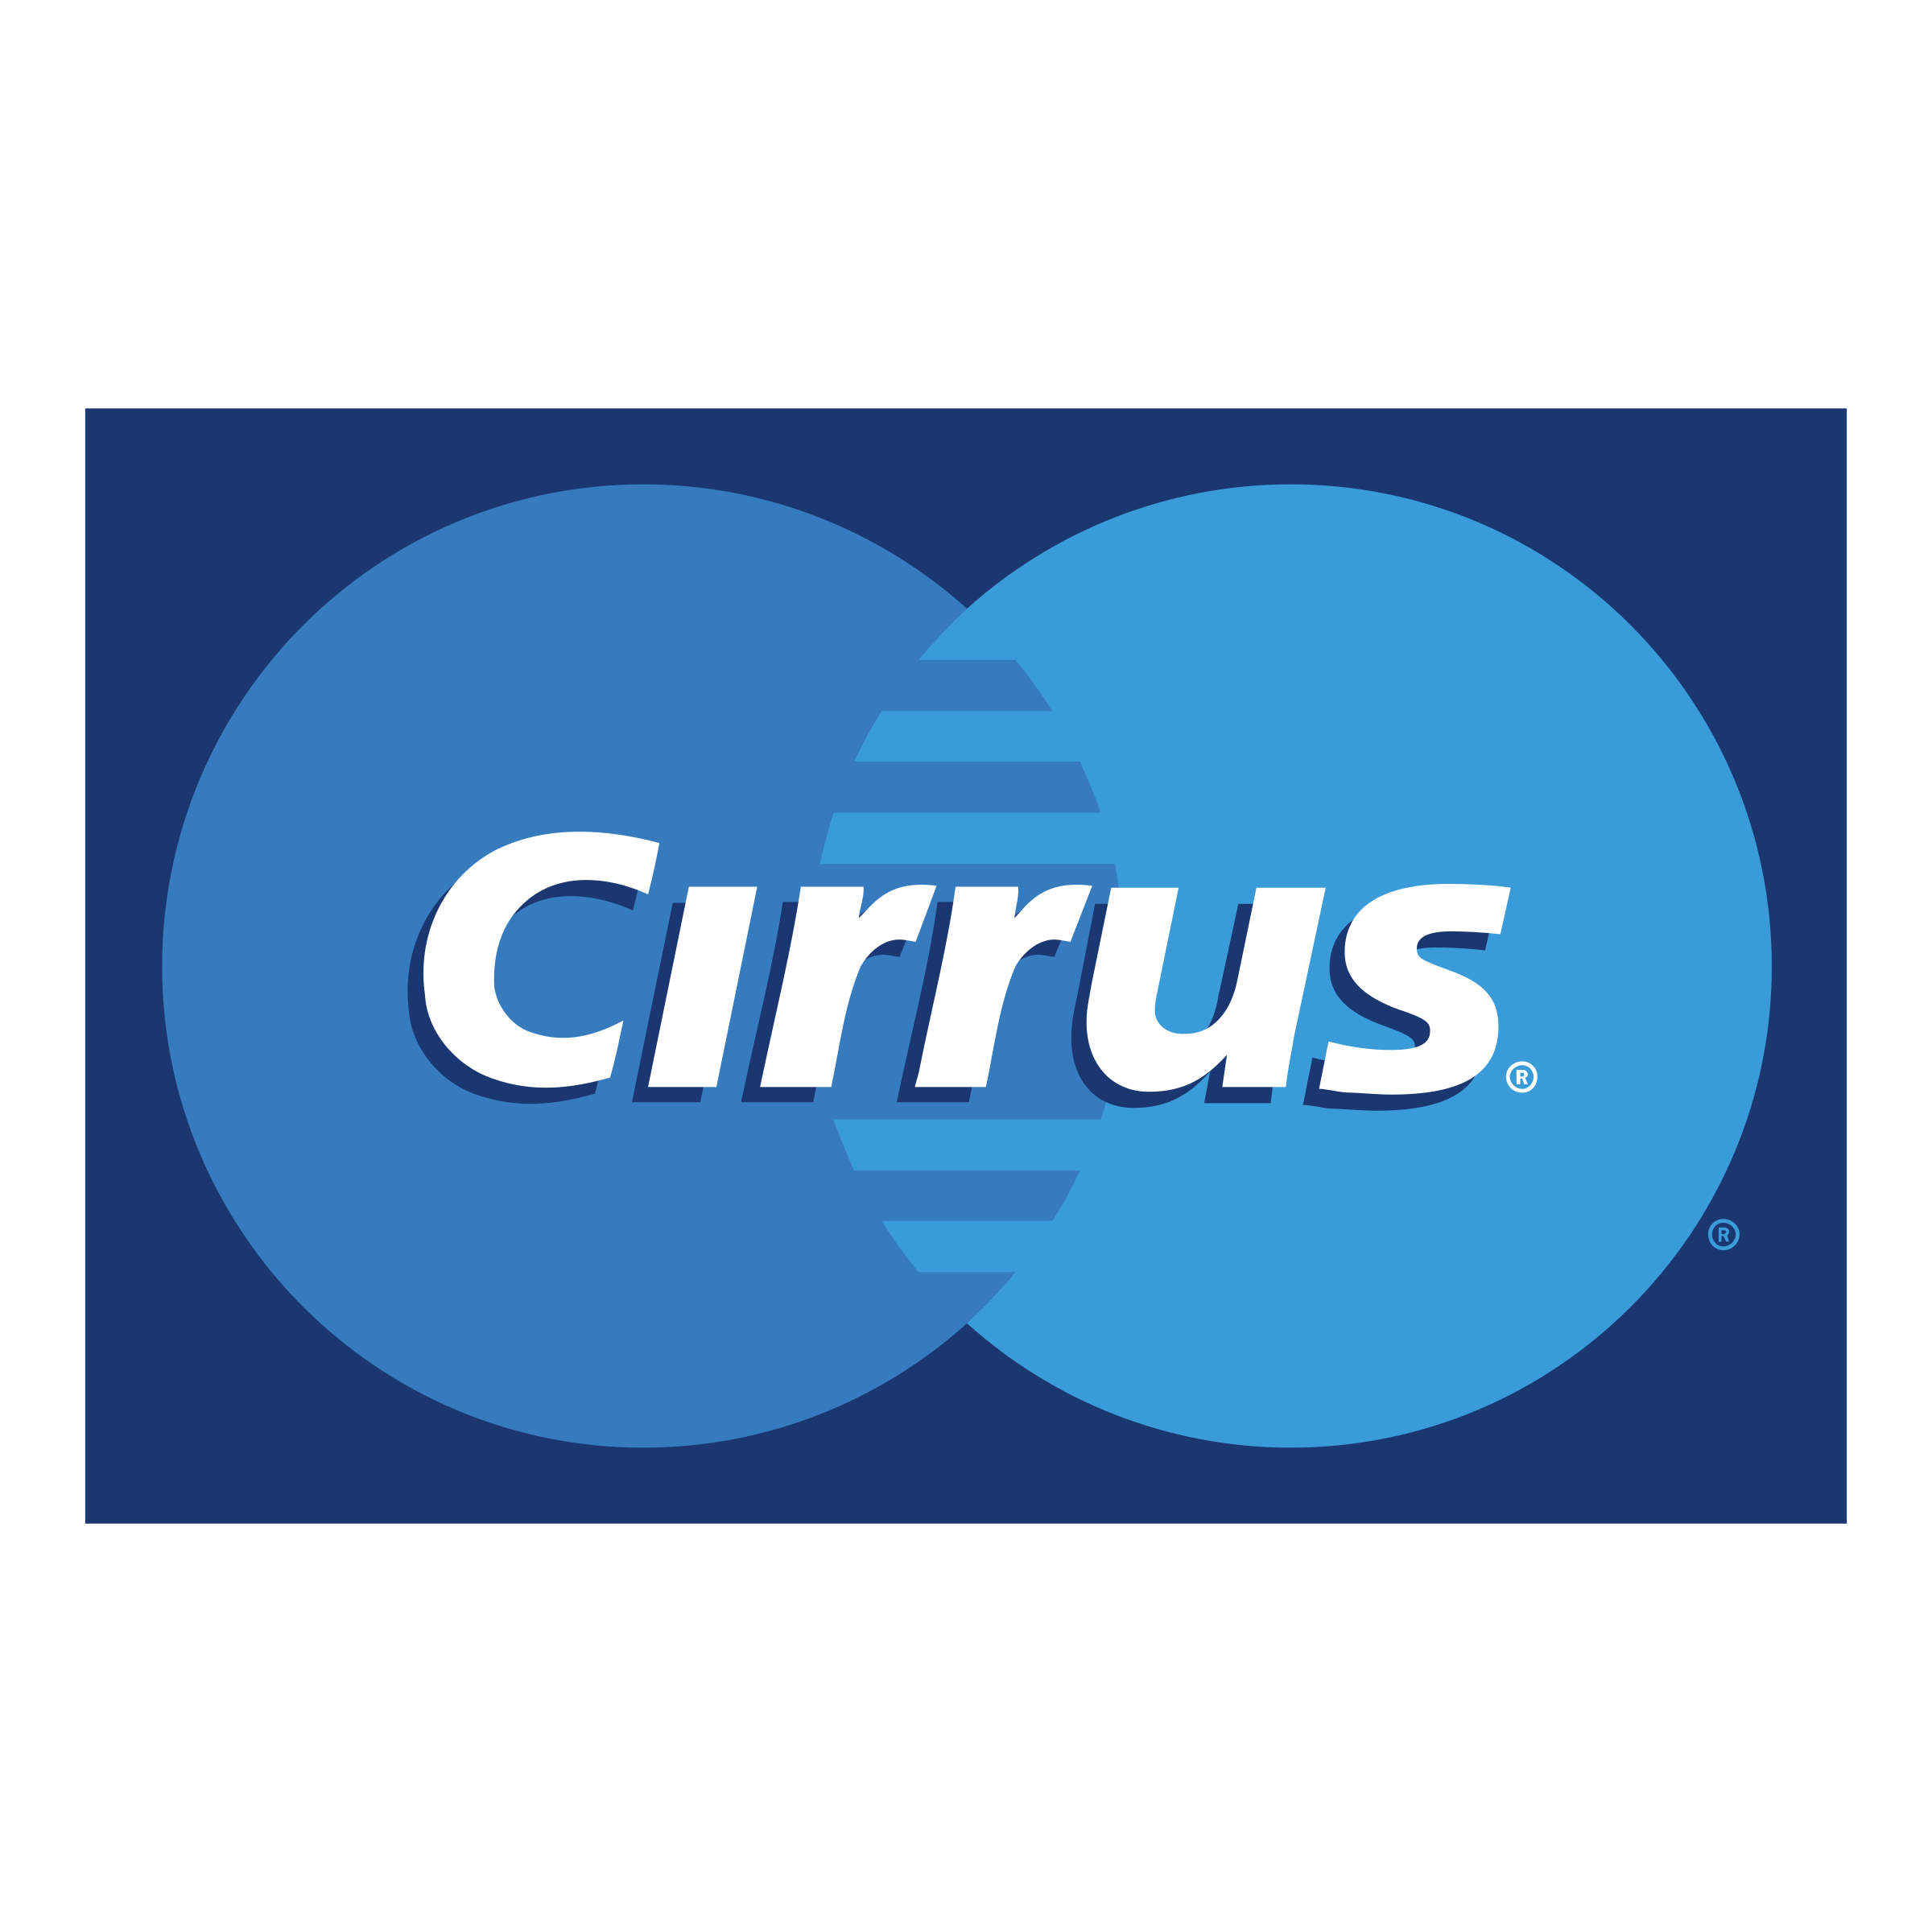 Cirrus Logo - Cirrus Logo PNG Transparent & SVG Vector - Freebie Supply